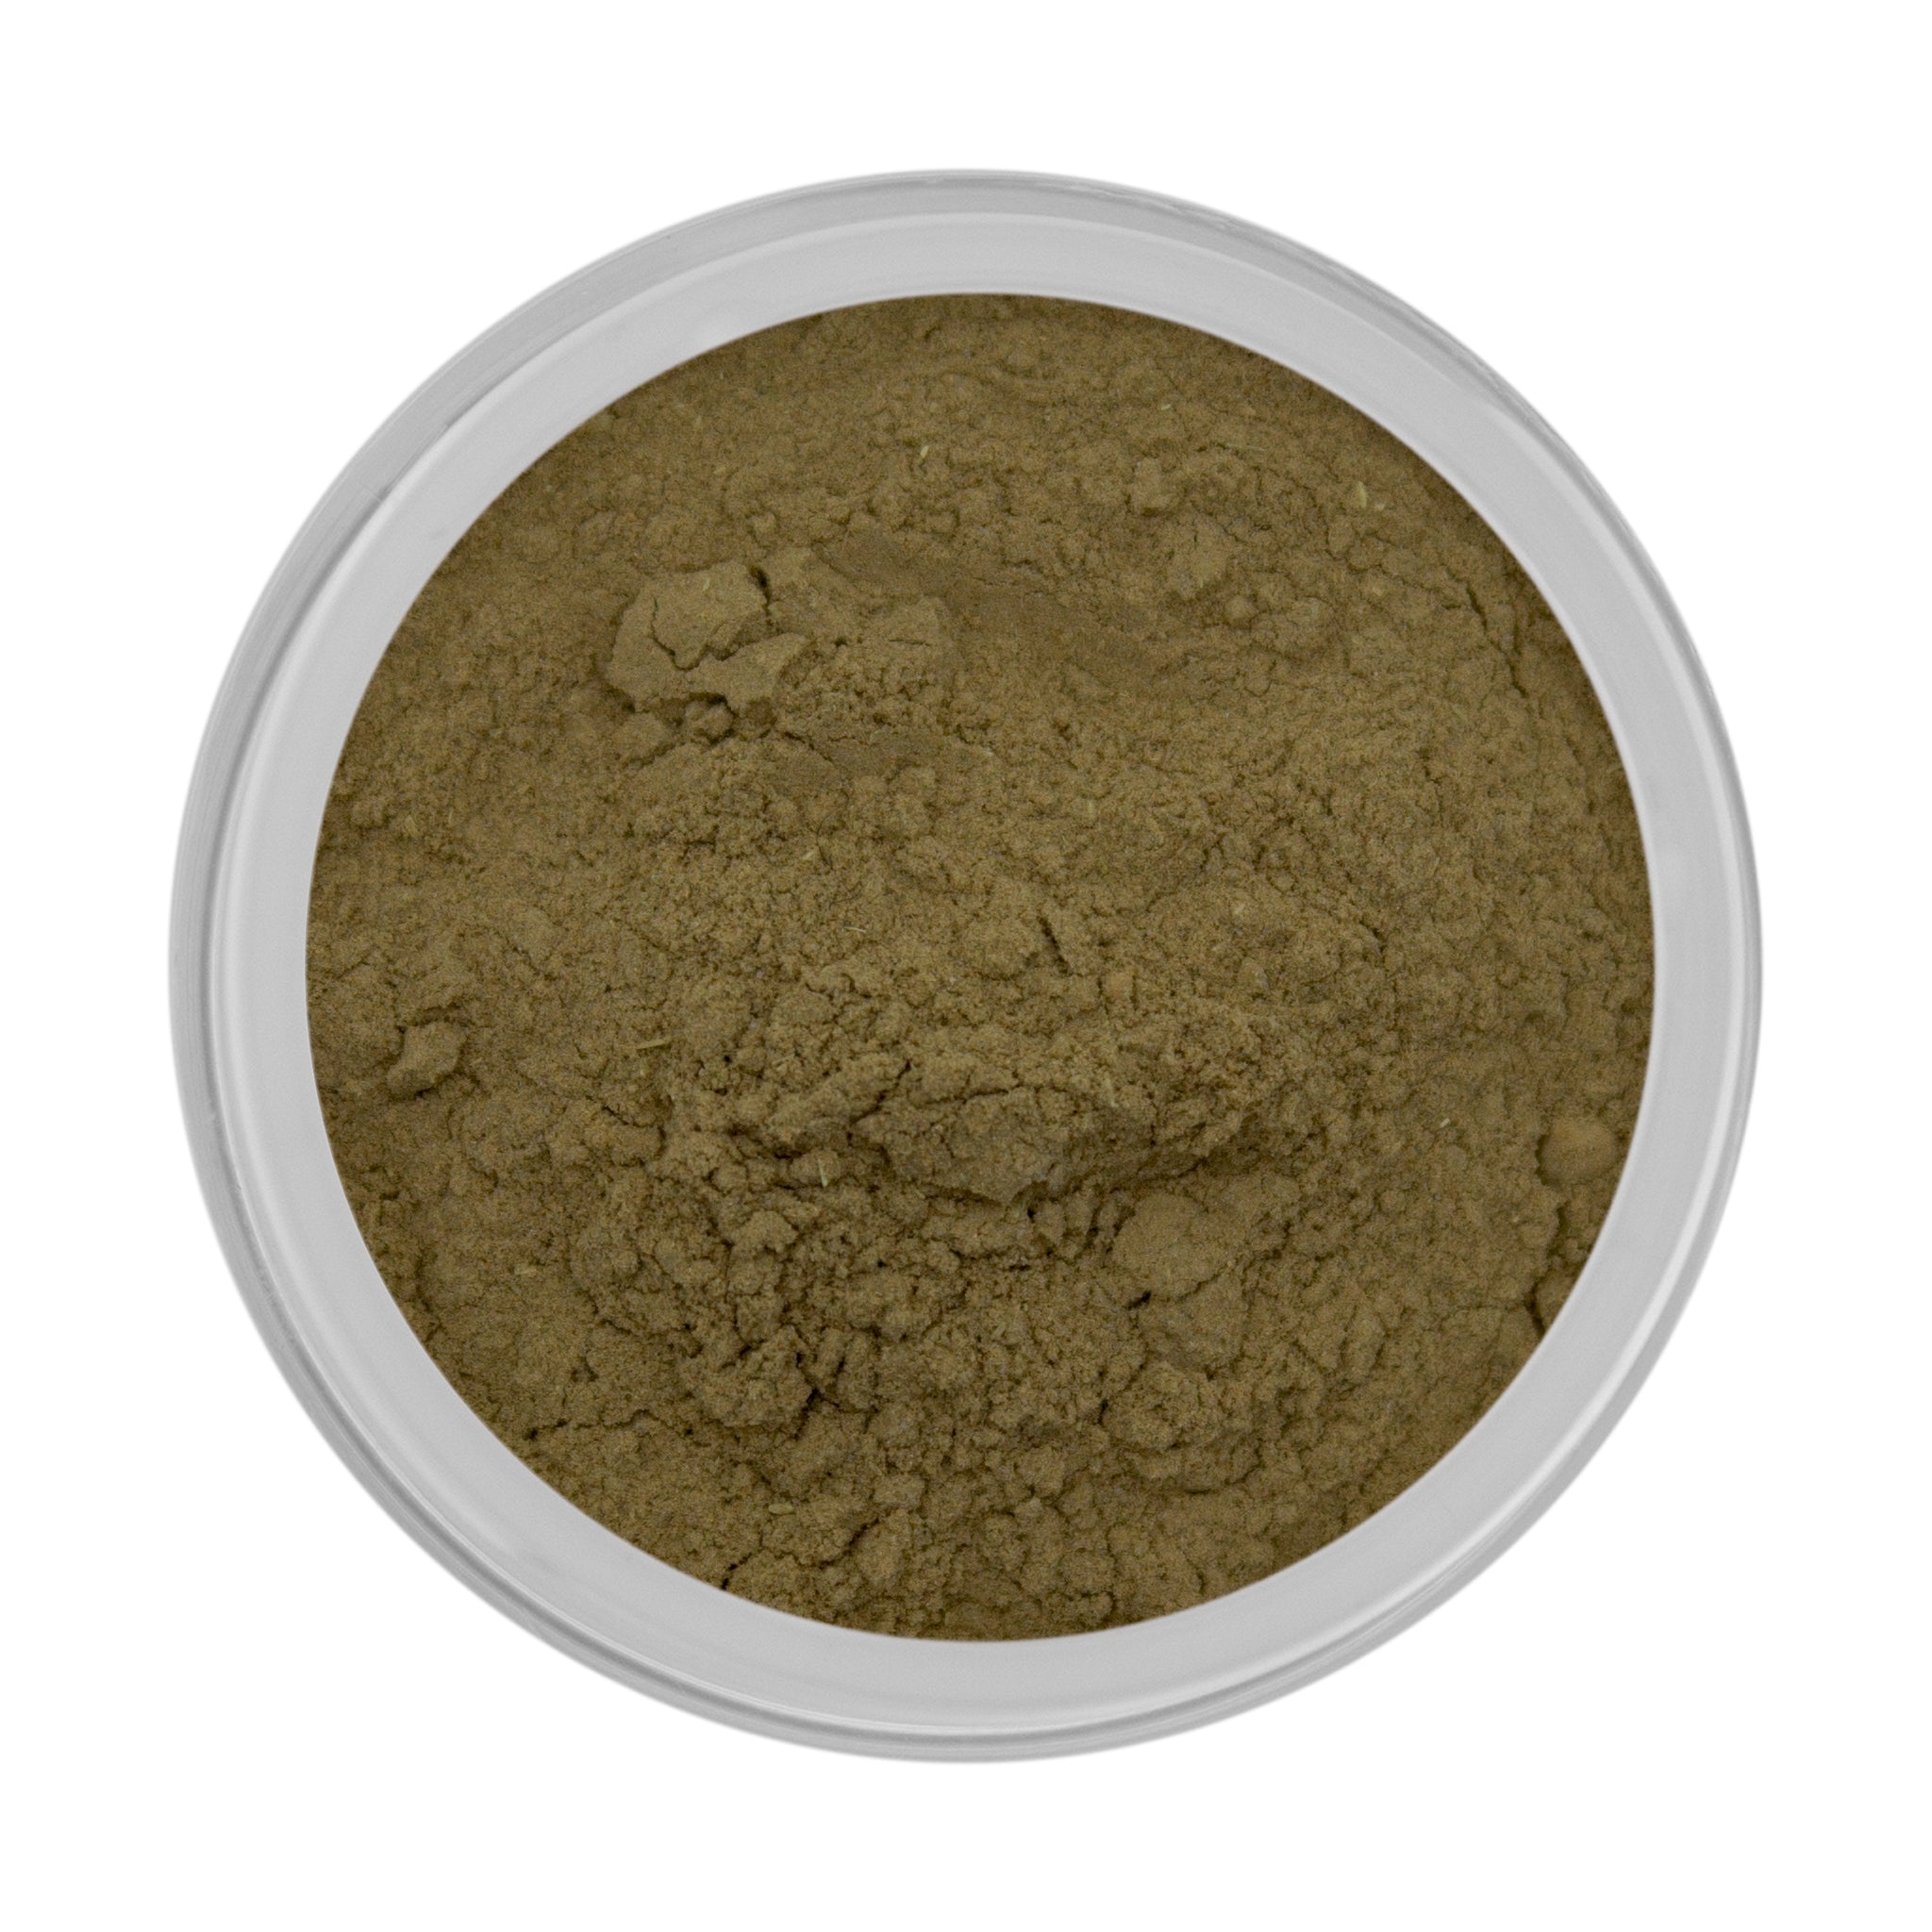 Powdered Green Clay Masque